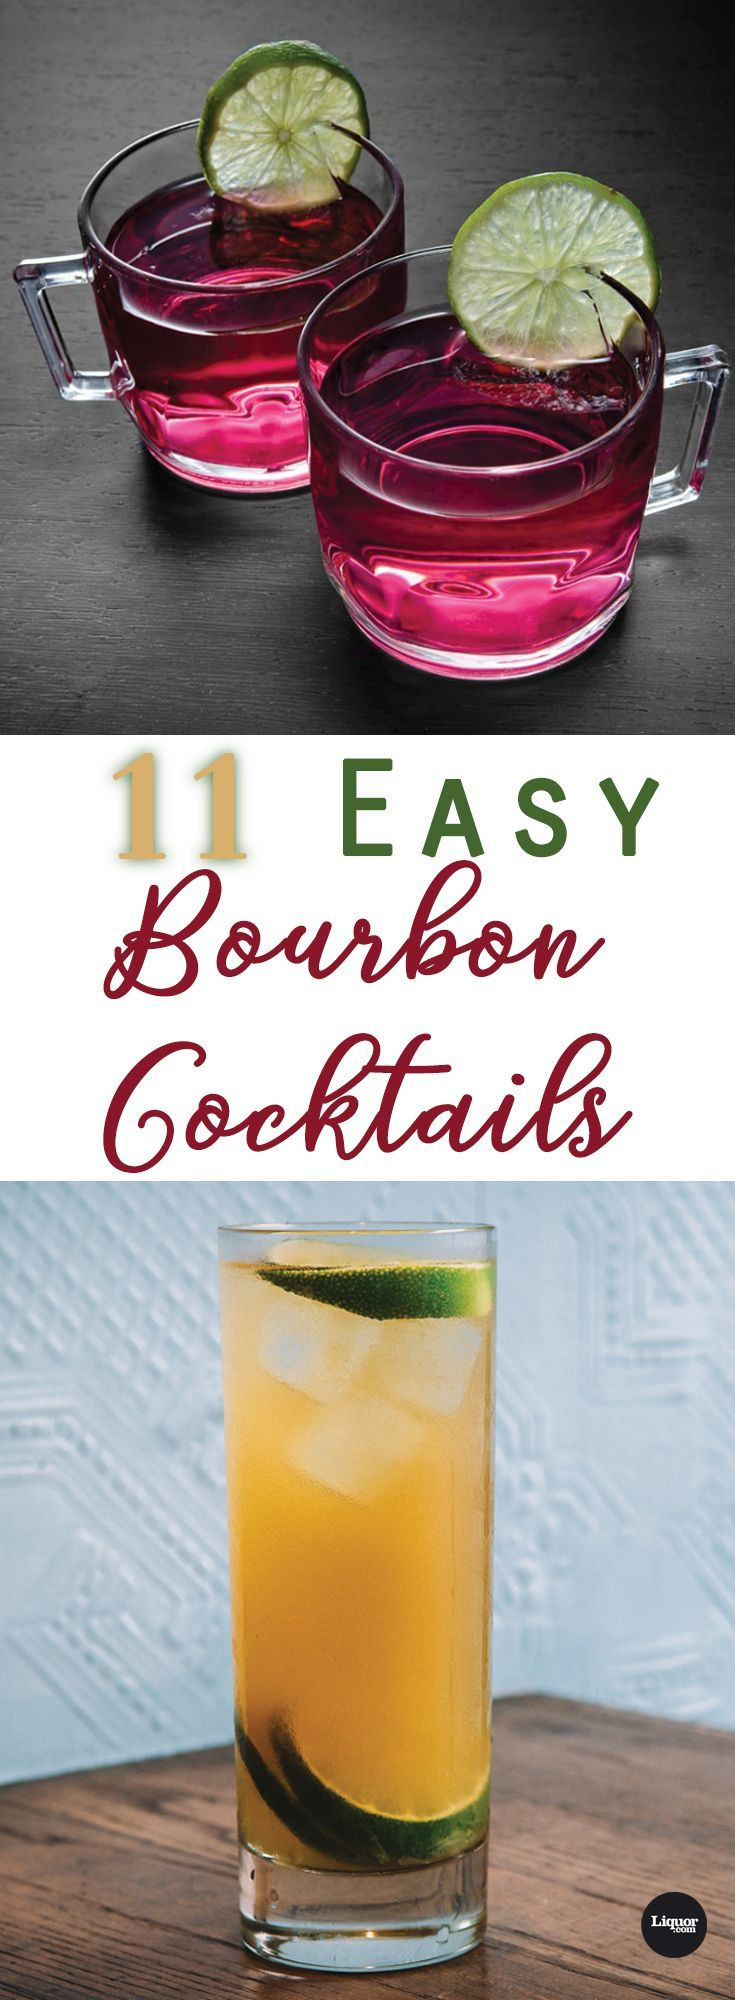 Easy Bourbon Drinks
 Try e of These 11 Impressively Easy Bourbon Cocktails